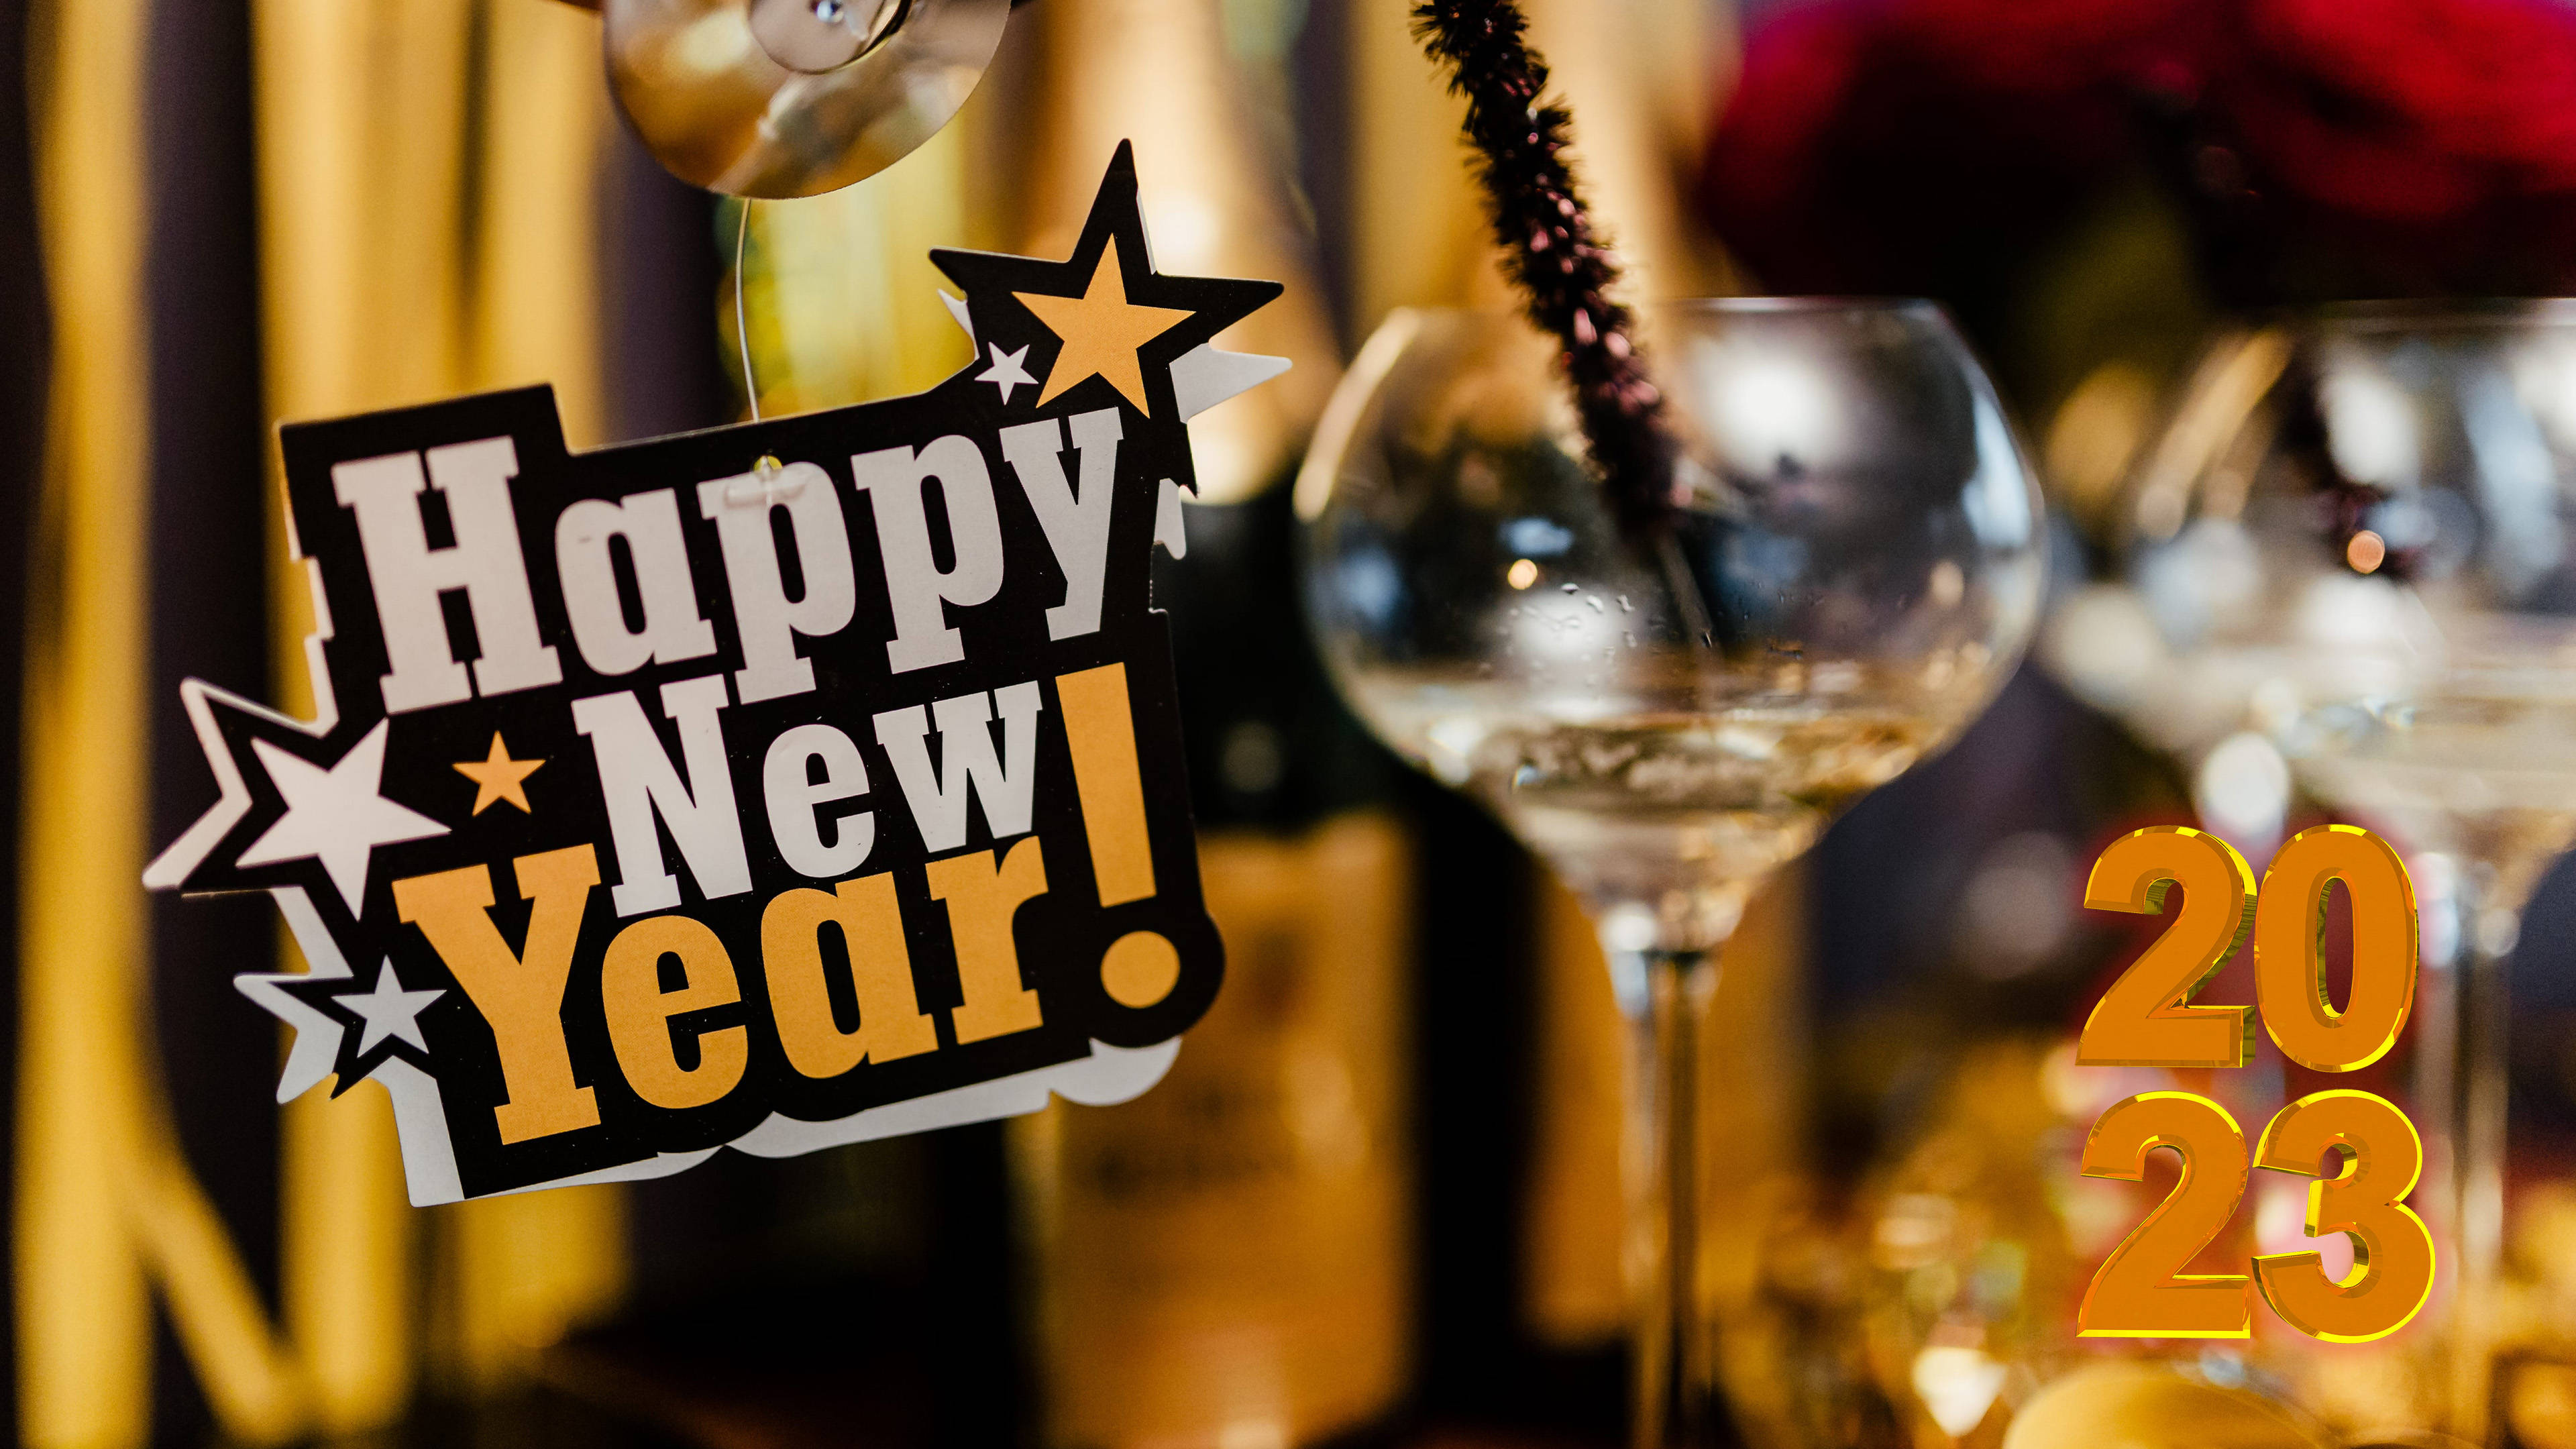 Download Festive Happy New Year 2023 Wallpaper